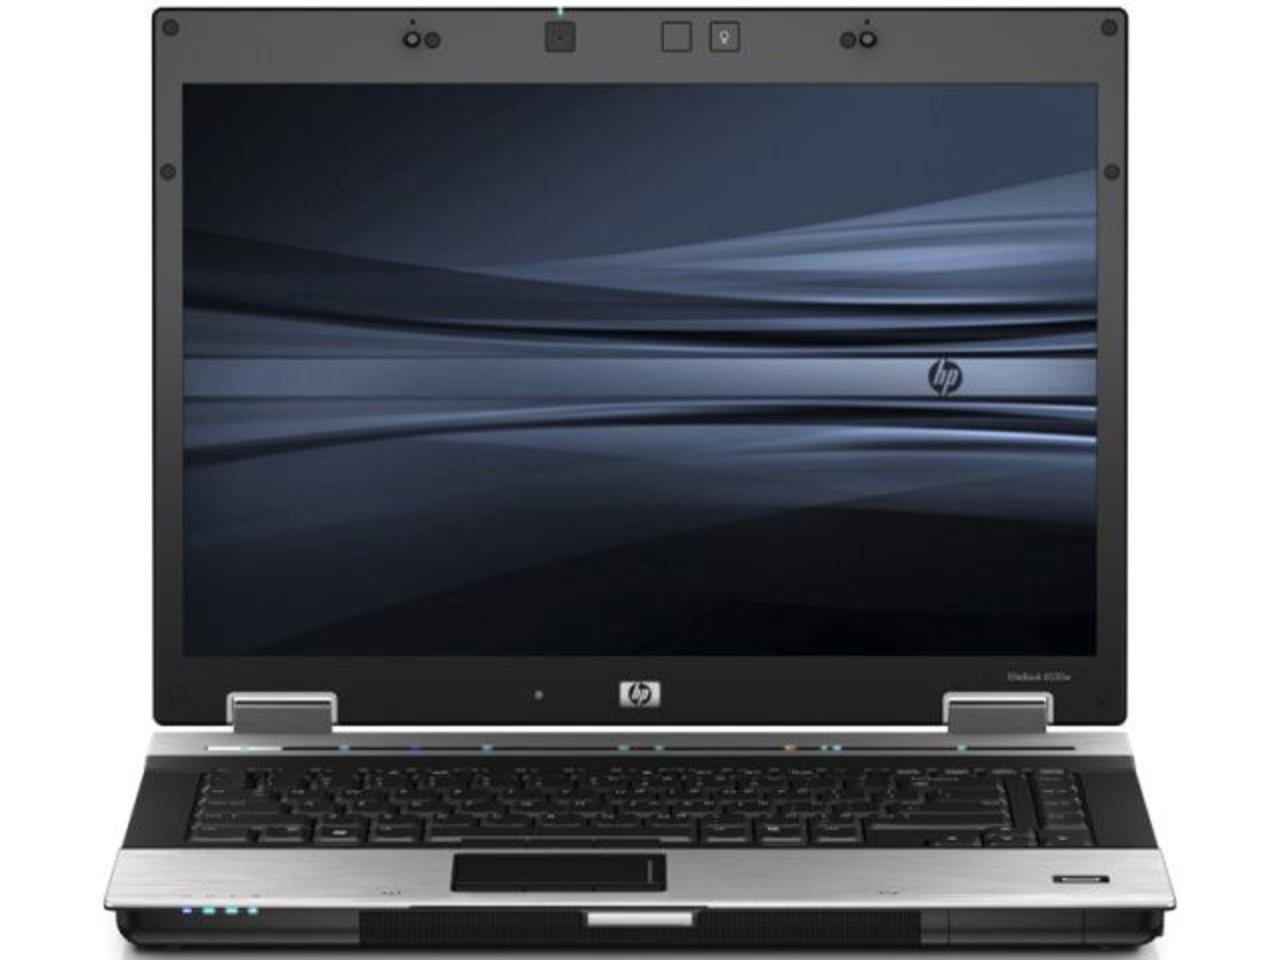  HP EliteBook 8530w Full HD